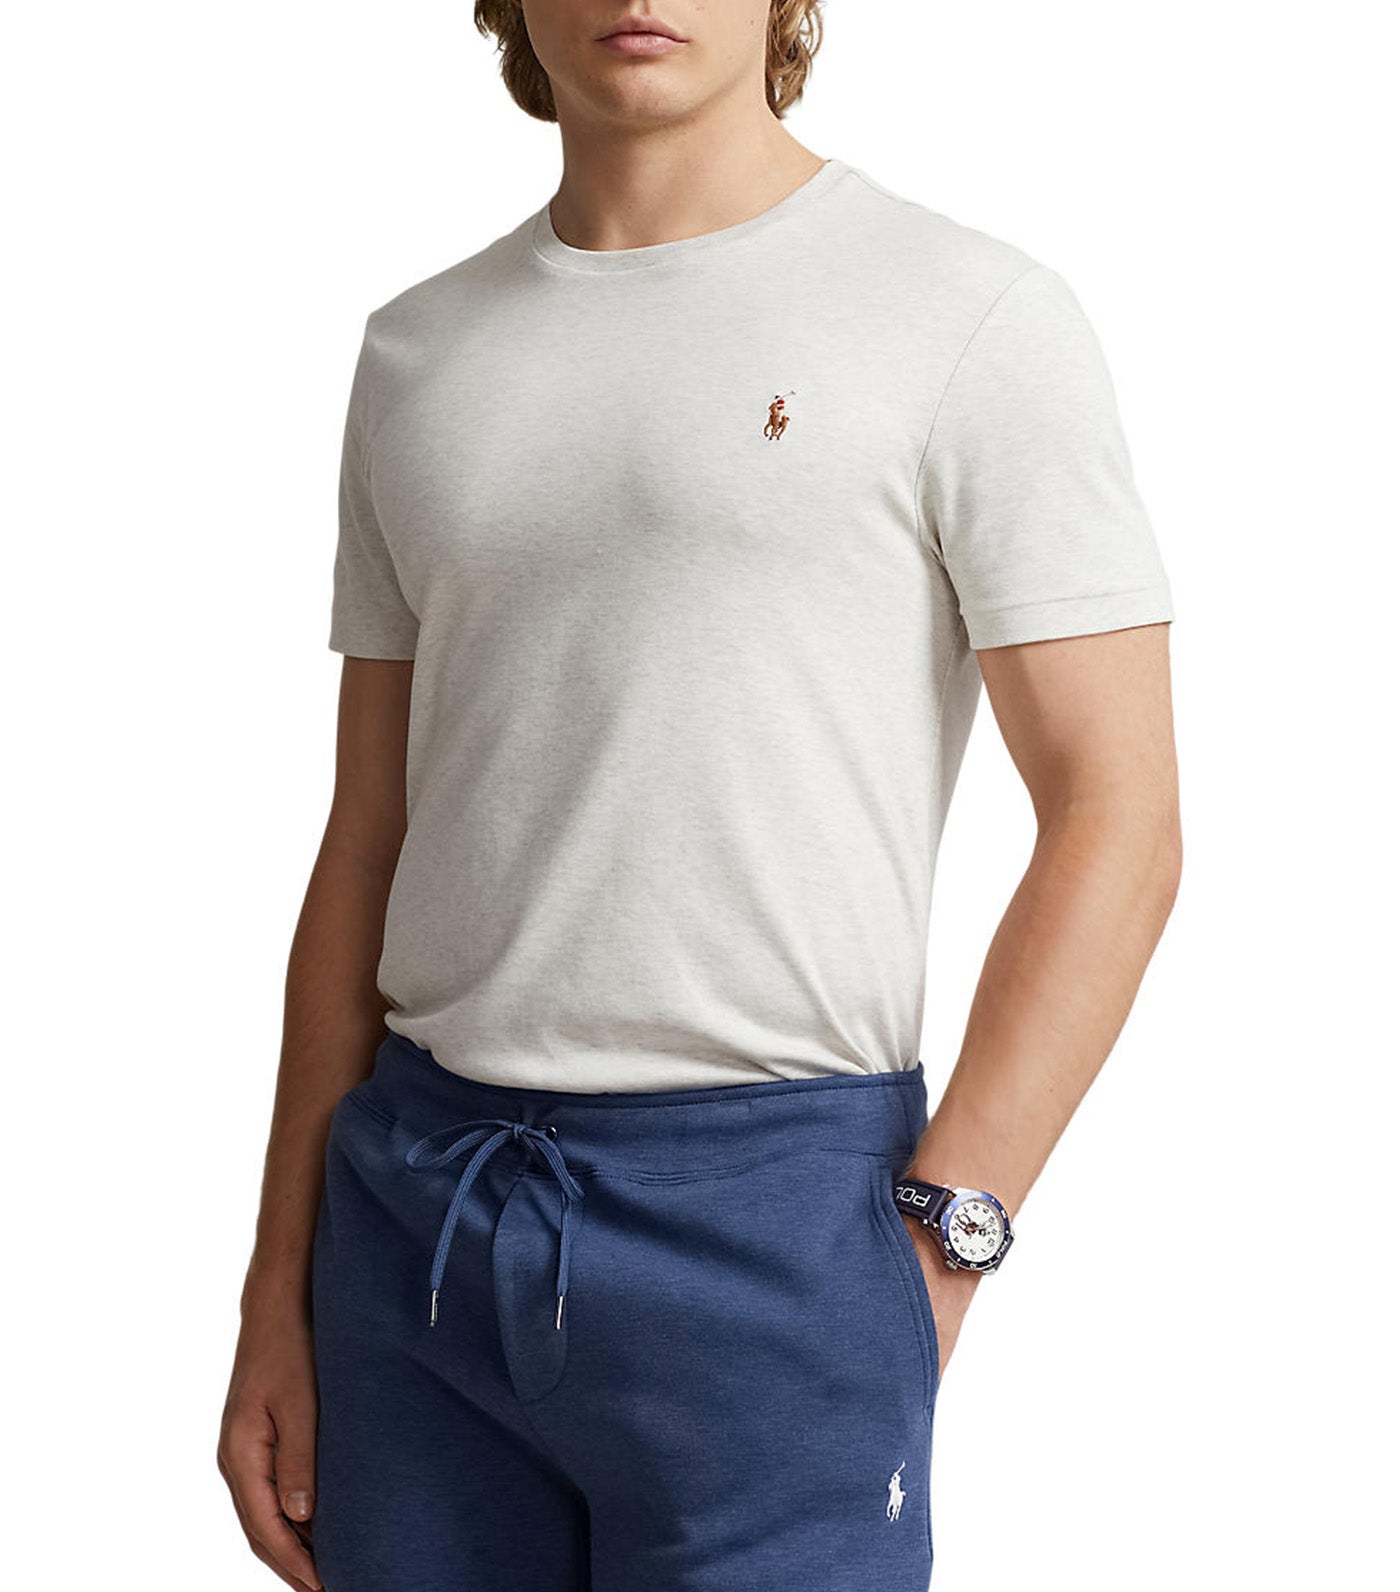 Men's Custom Slim Fit Soft Cotton T-Shirt State Heather